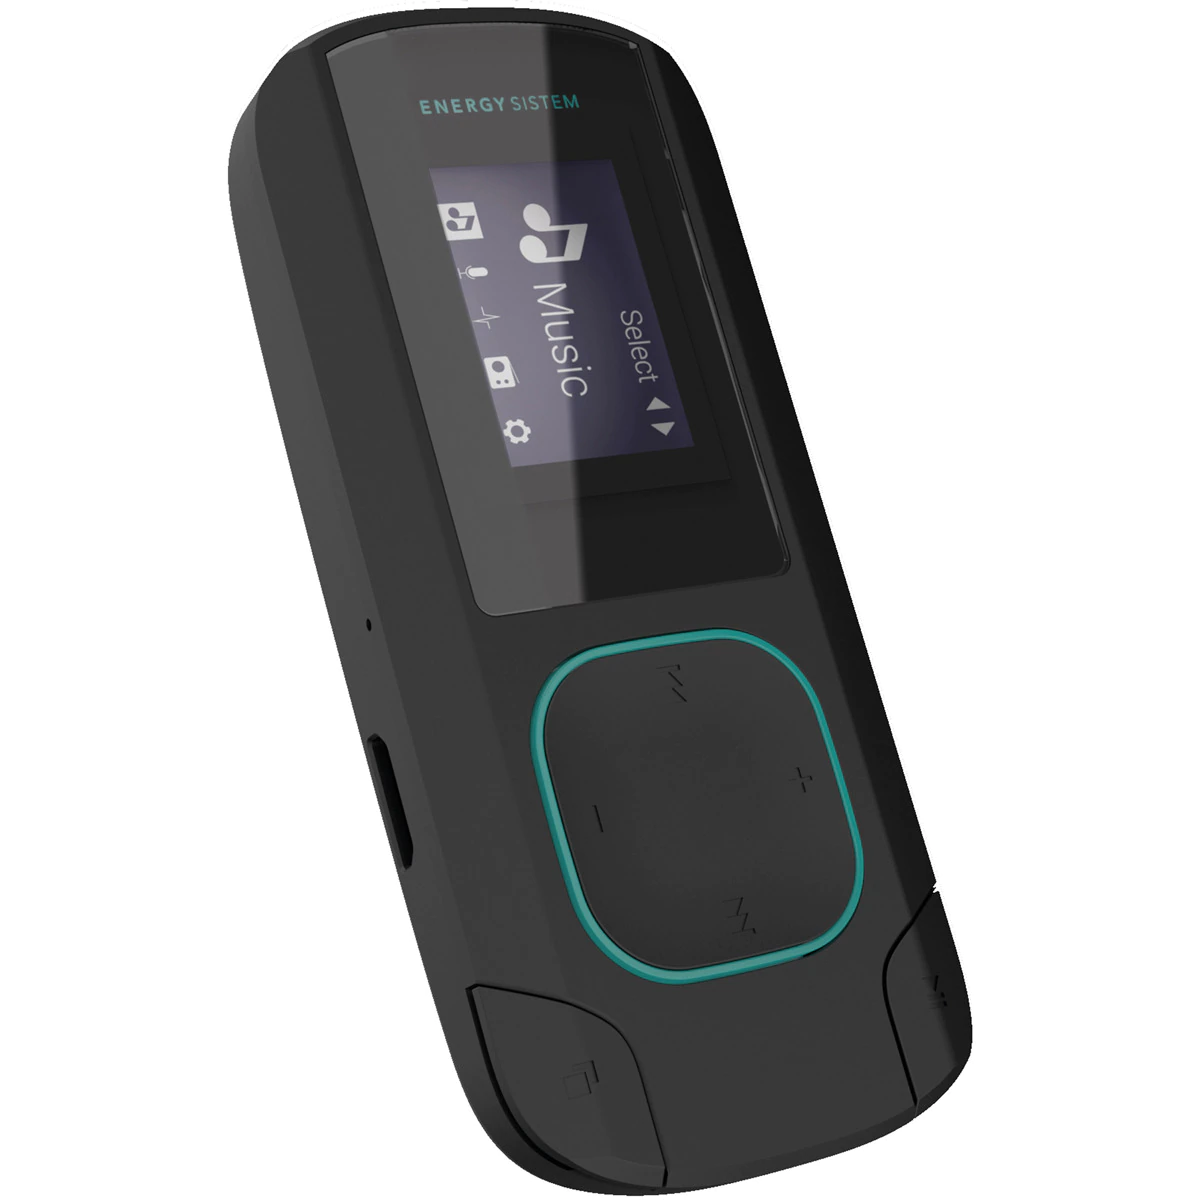 Reproductor MP3 Energy Sistem Clip Bluetooth Mint de 8 GB con radio FM